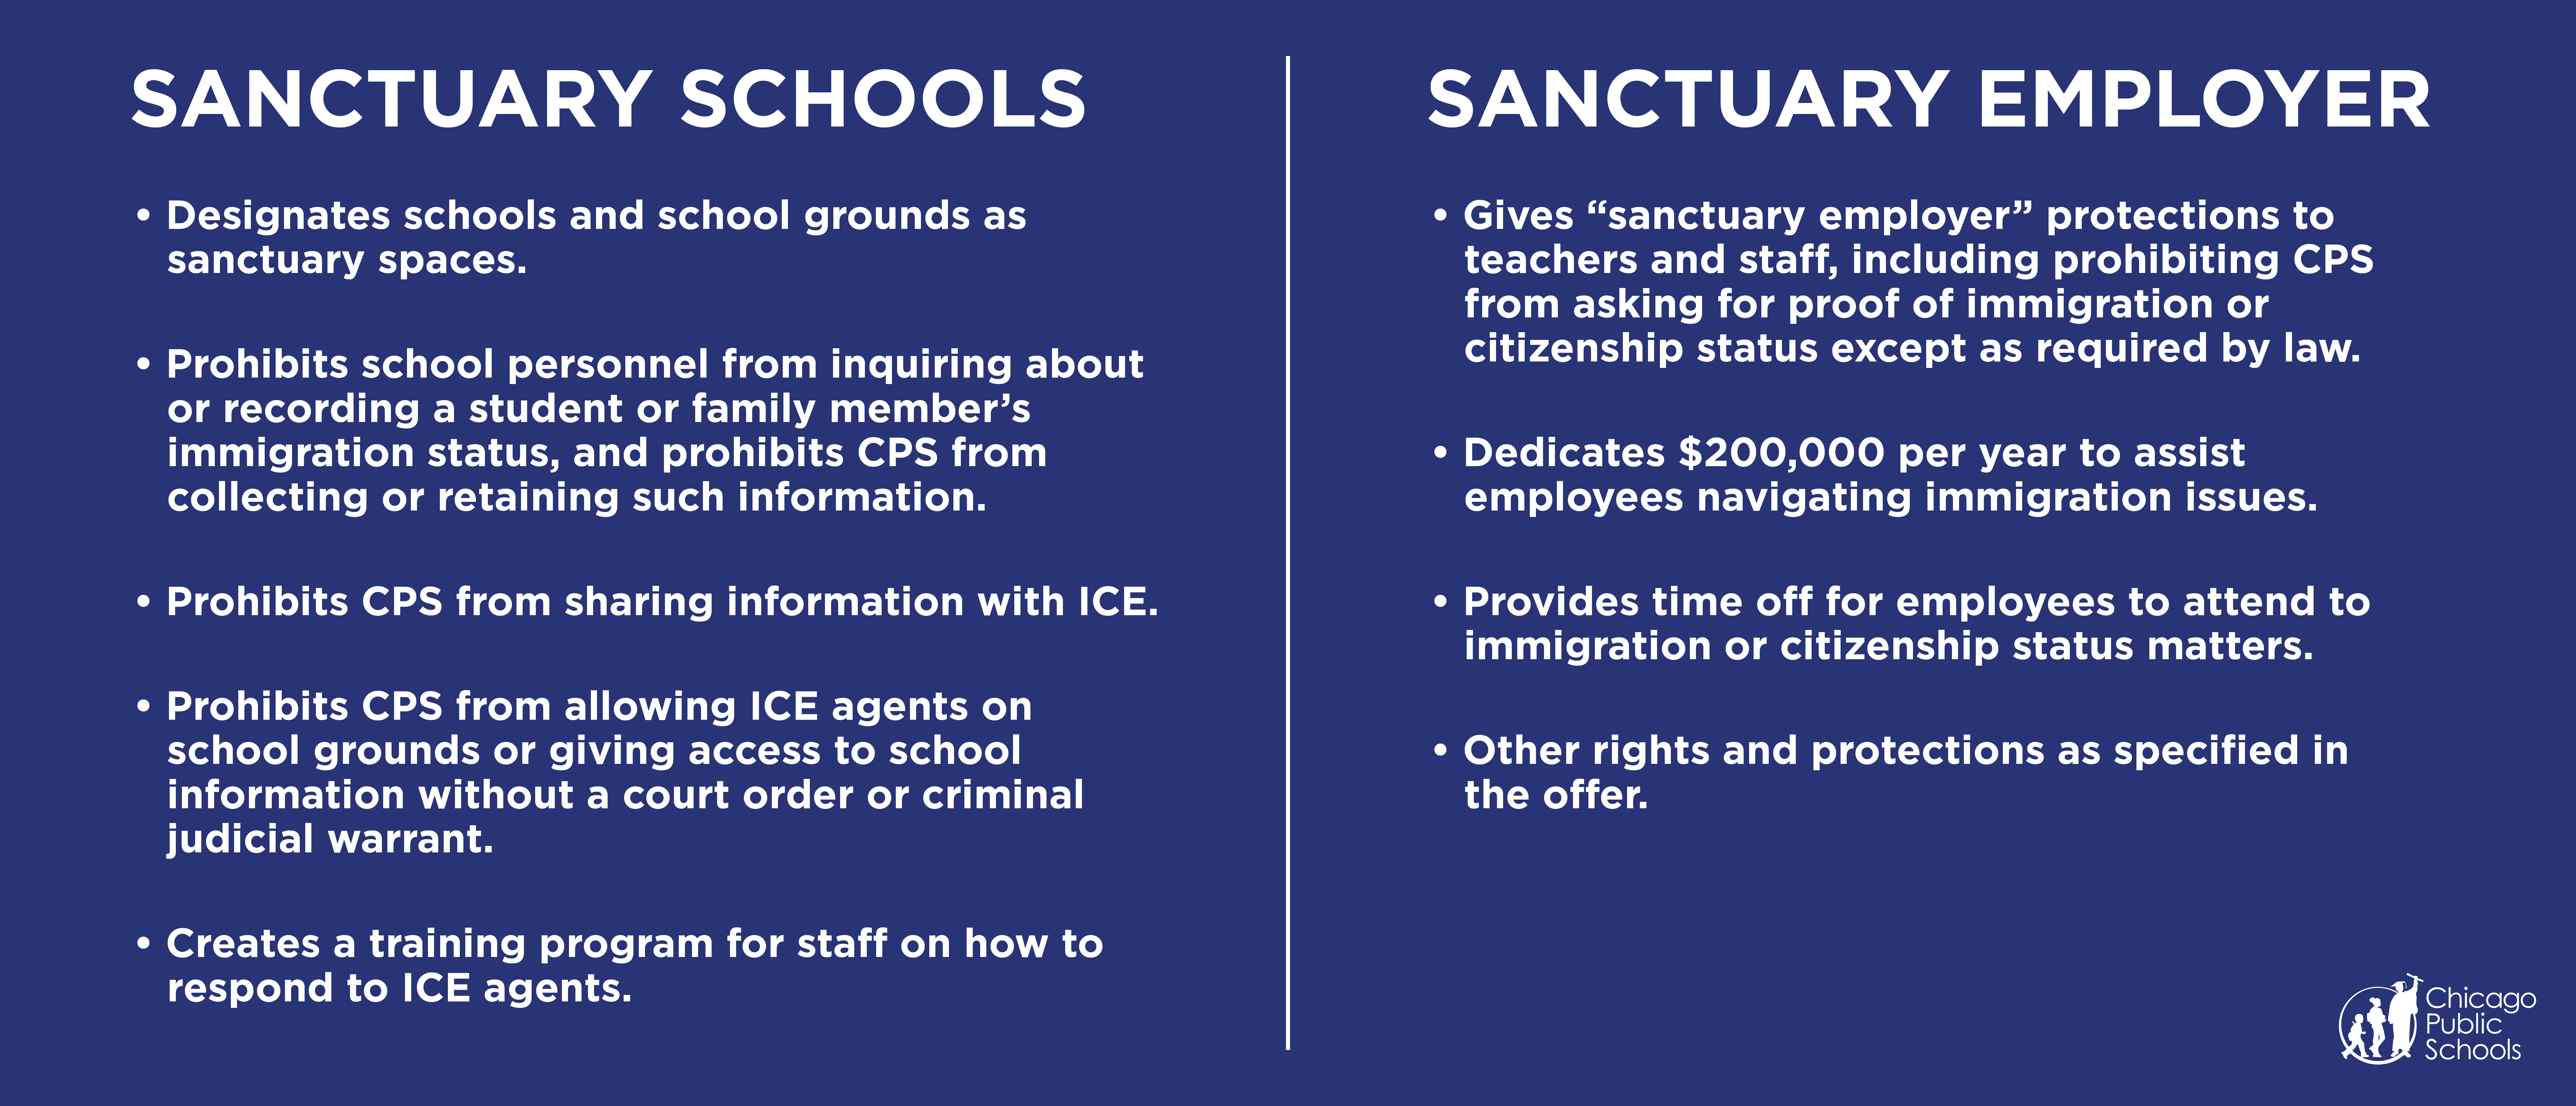 Sanctuary schools and sanctuary employer